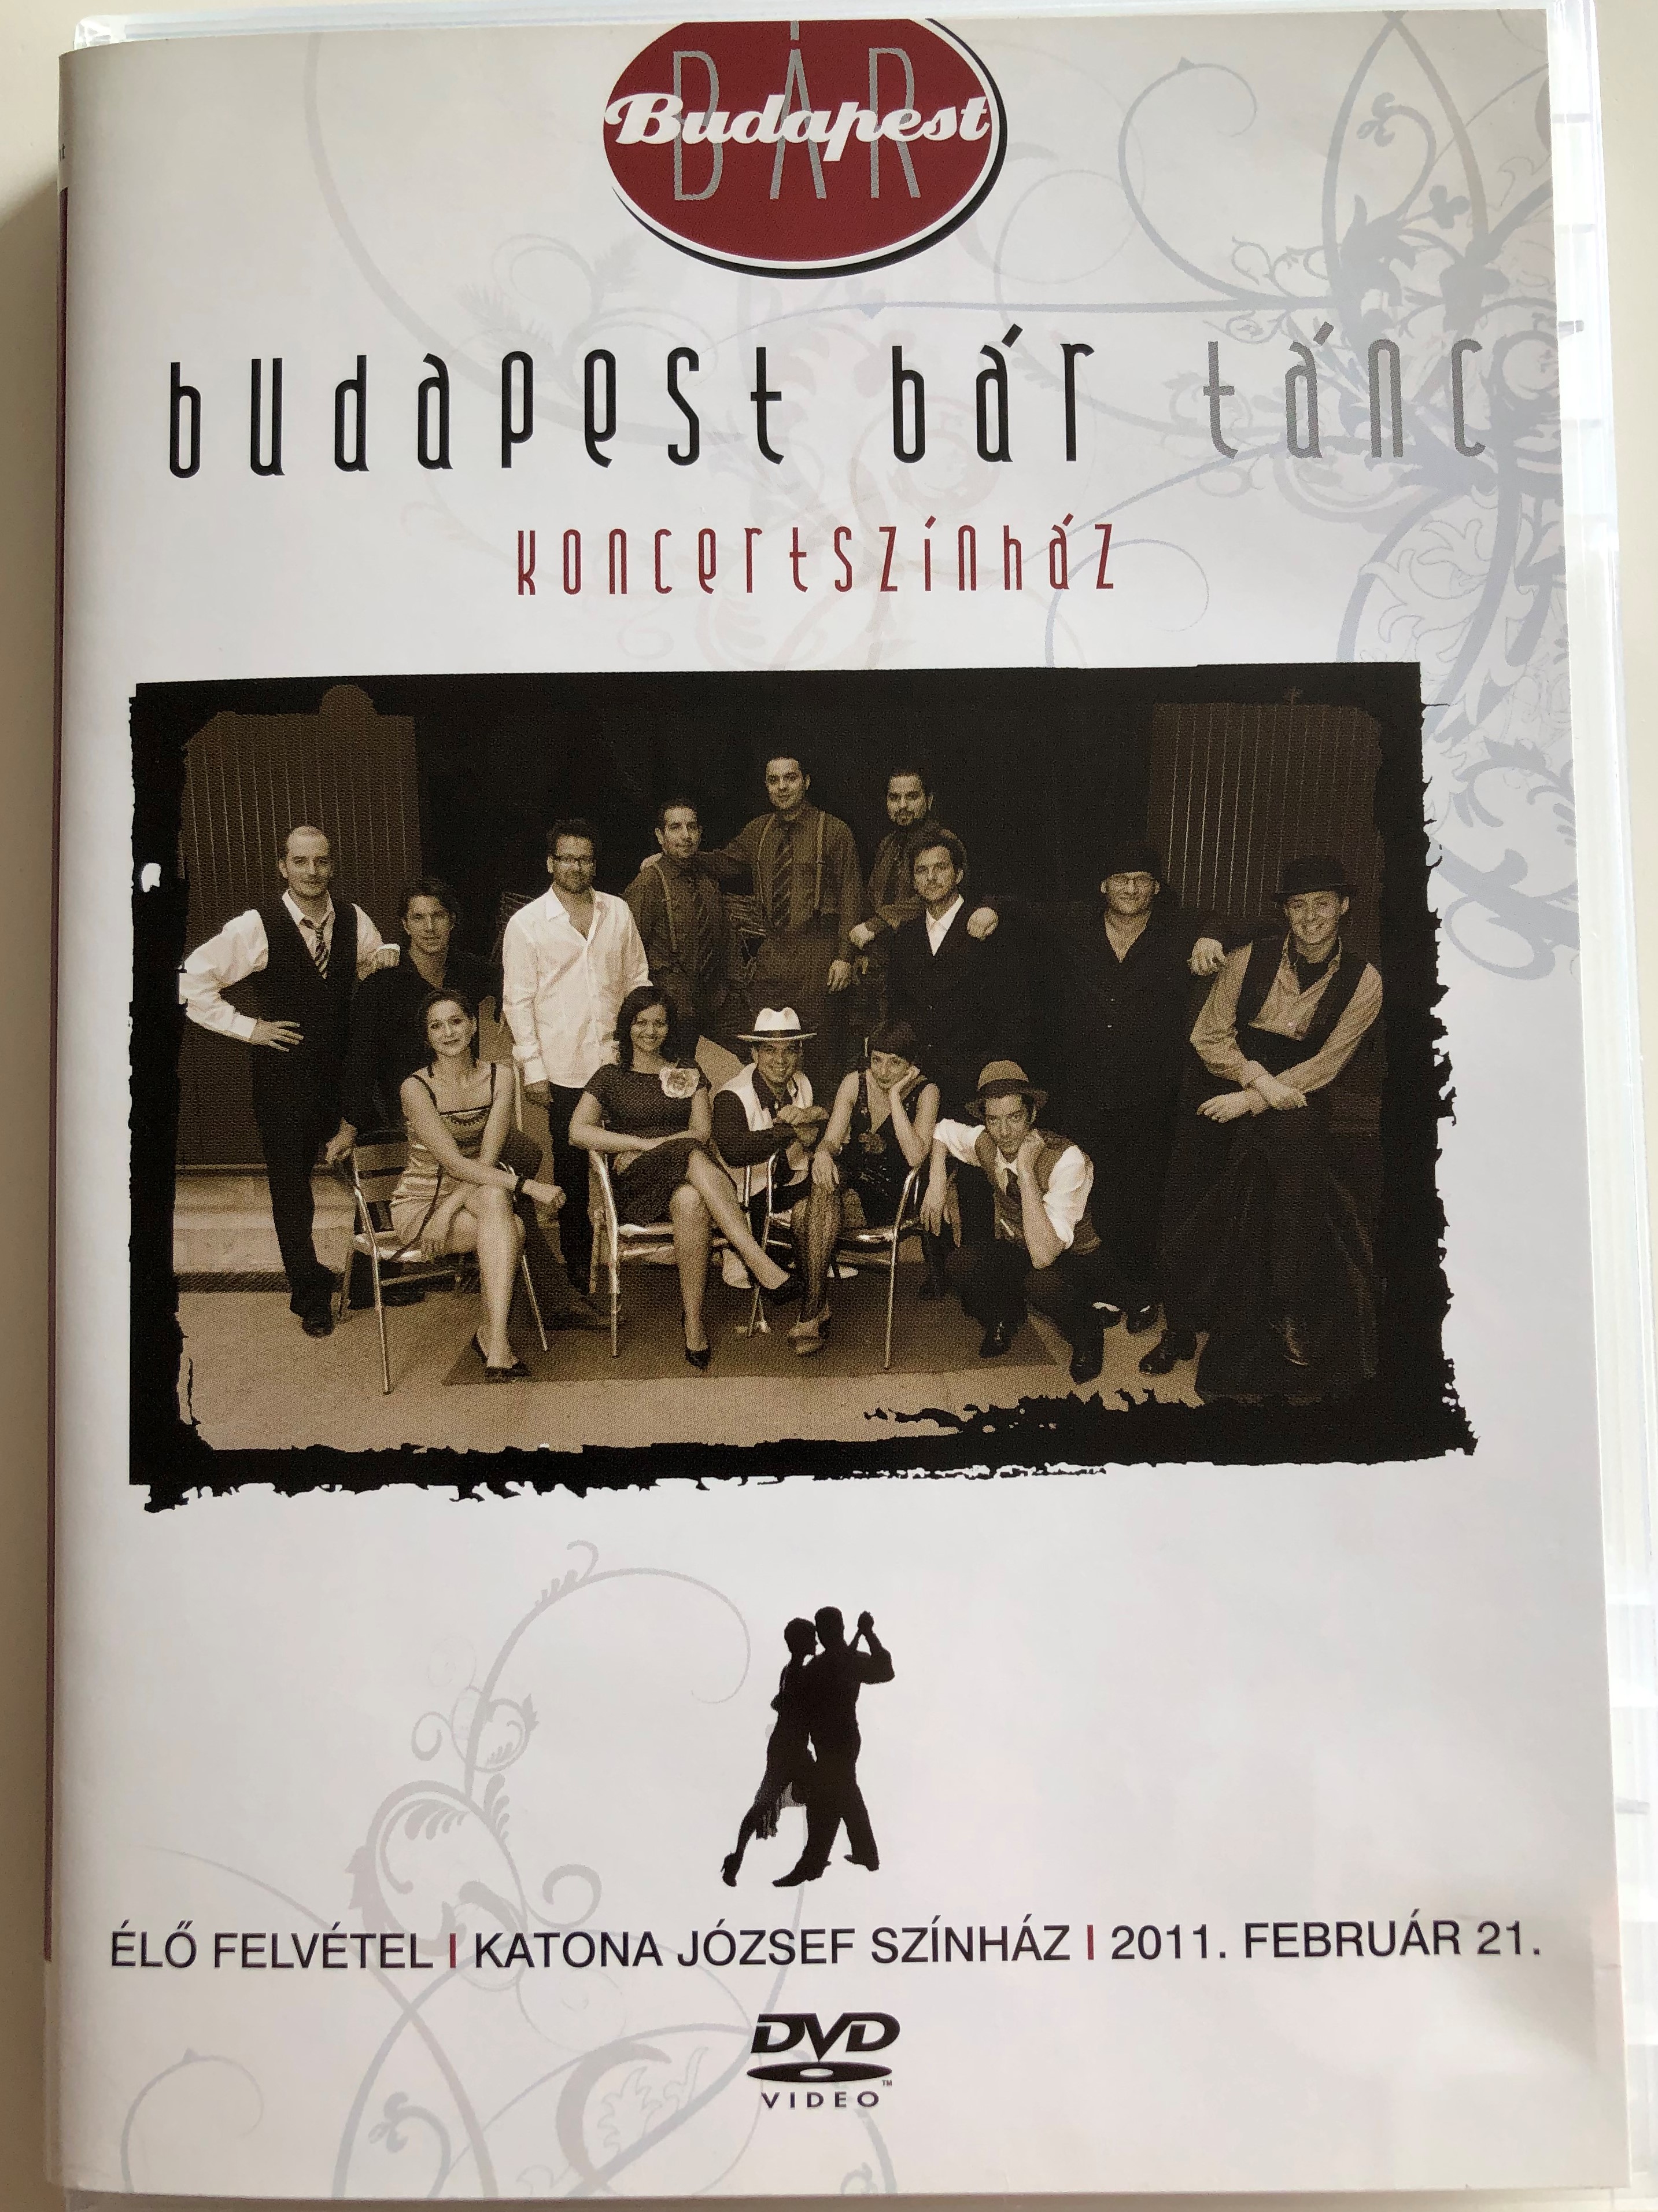 budapest-b-r-t-nc-koncertsz-nh-z-dvd-2011-budapest-bar-dance-concert-theater-live-recording-katona-j-zsef-theater-2011-sony-music-1-.jpg